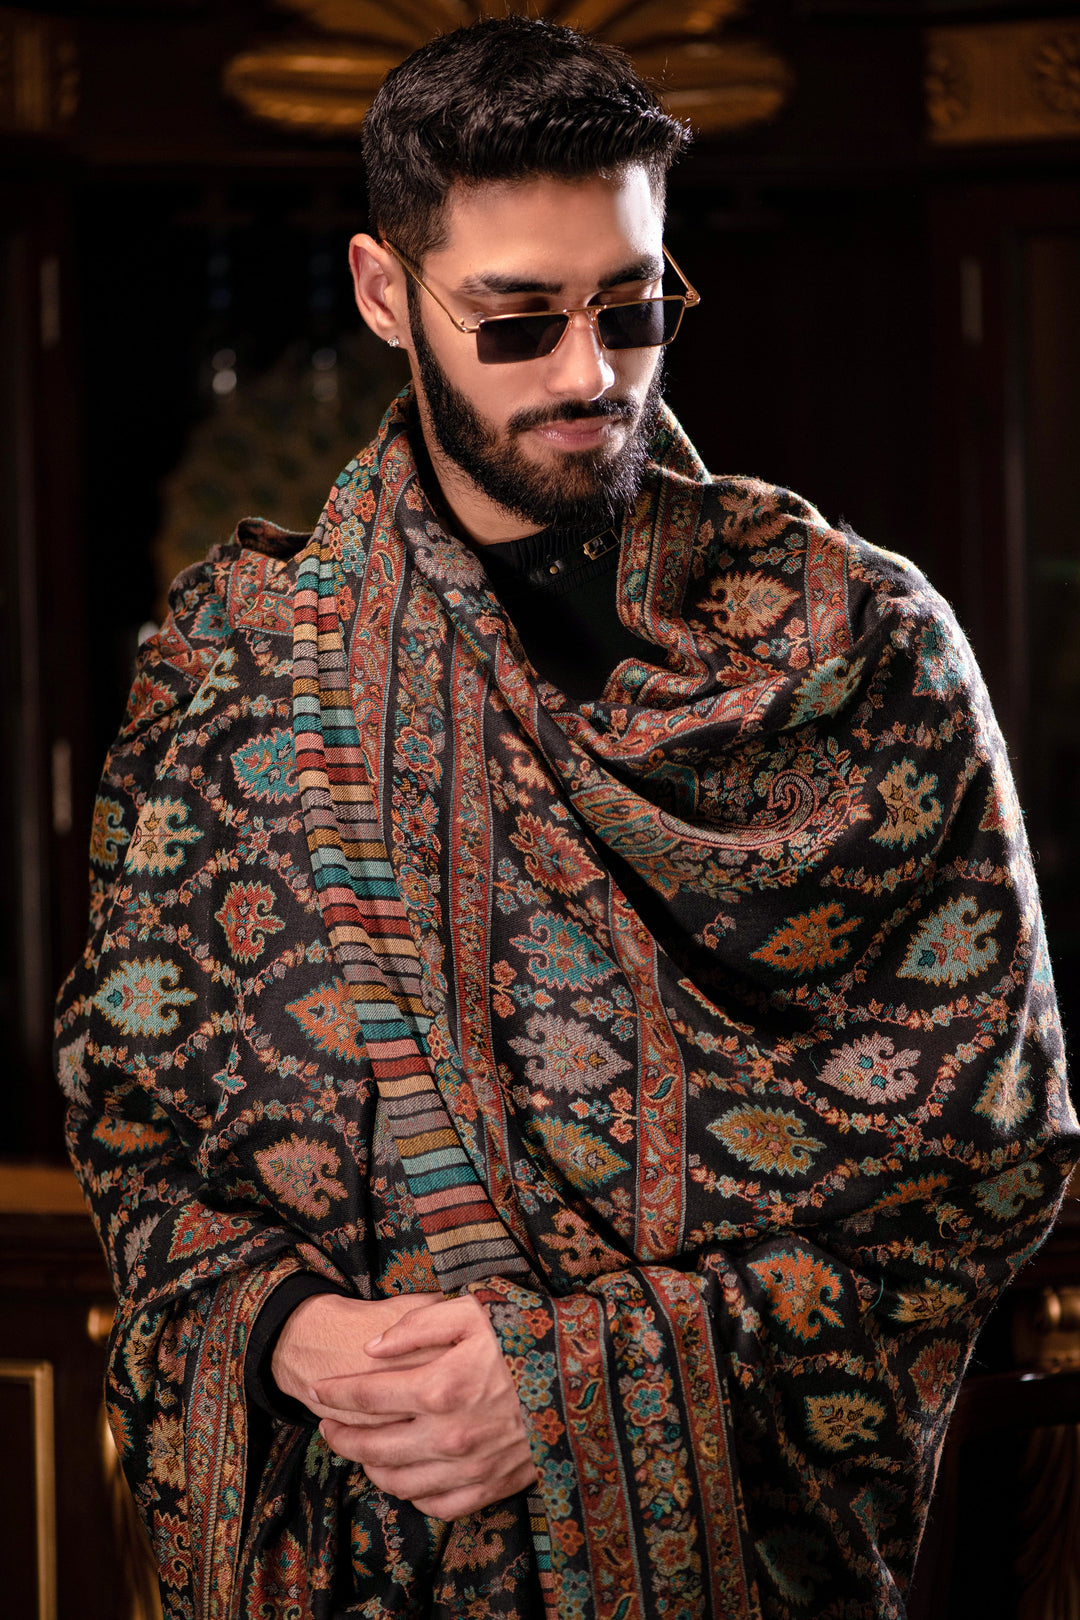 Pashtush India Mens Shawls Gents Shawl Pashtush mens Extra Fine Wool shawl, Ethnic design, Black